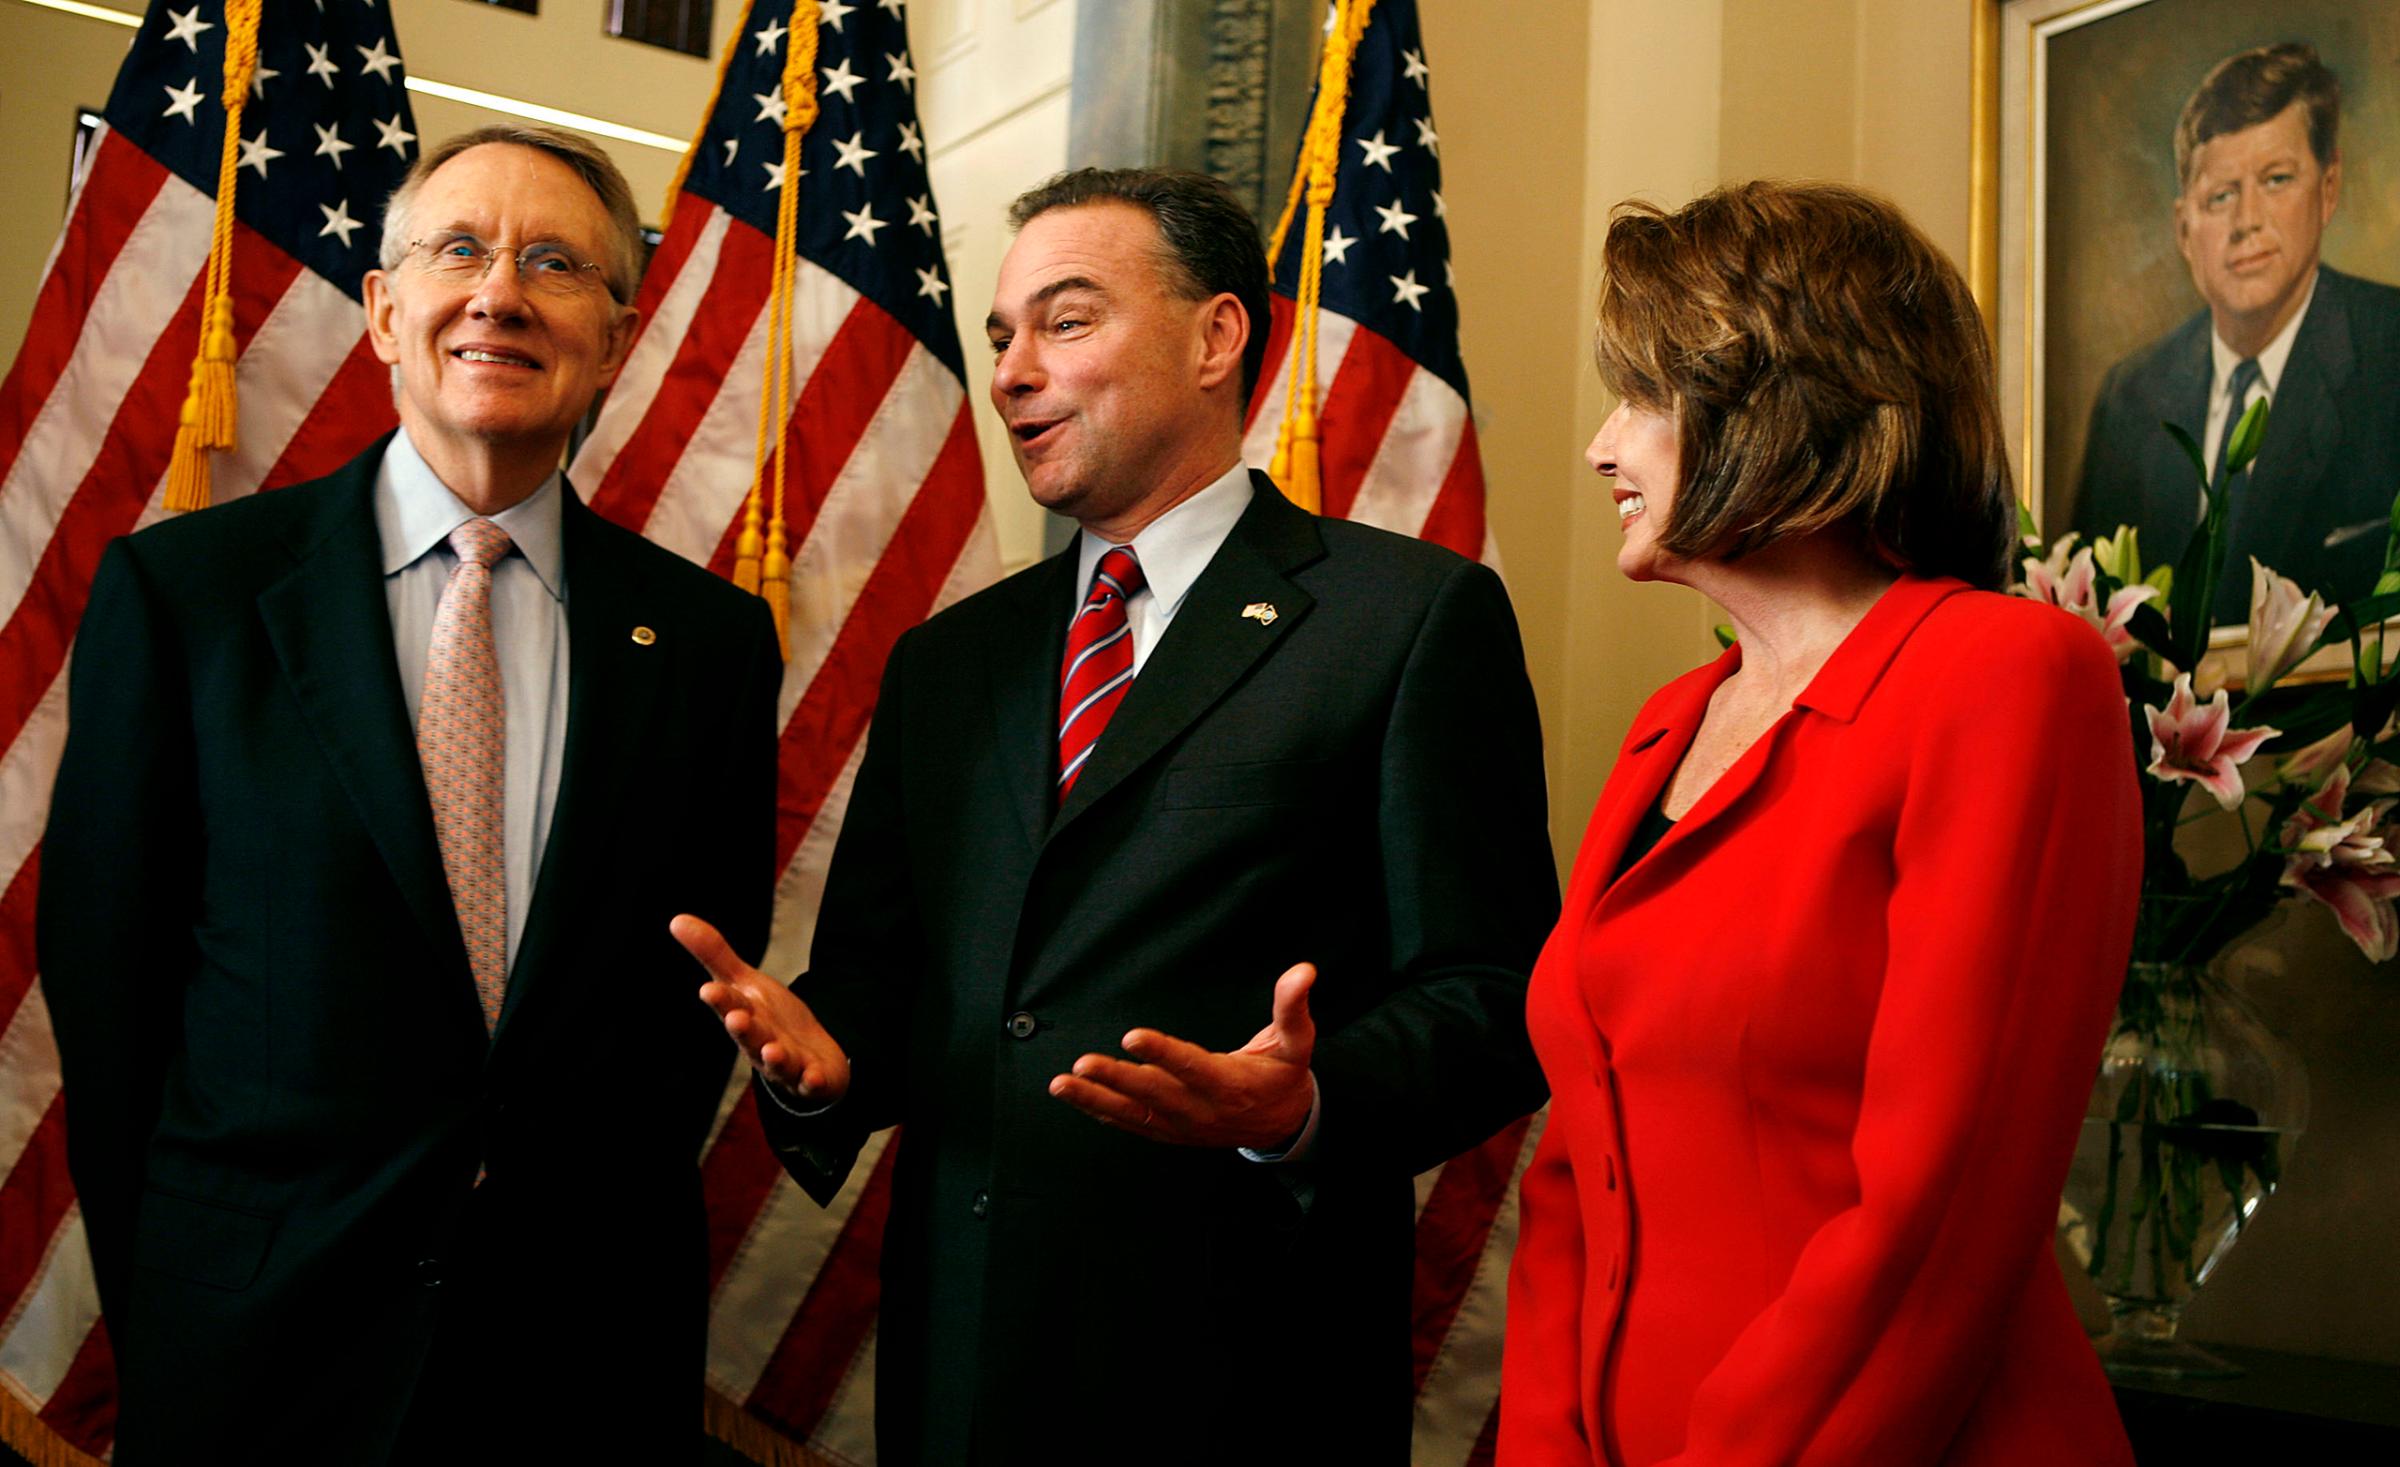 Senate Minority Leader Harry Reid left, Virginia Governor Tim Kaine center and House Minority Leader Nancy Pelosi pose for photographs on Capitol Hill in Washington on Jan. 31, 2006.